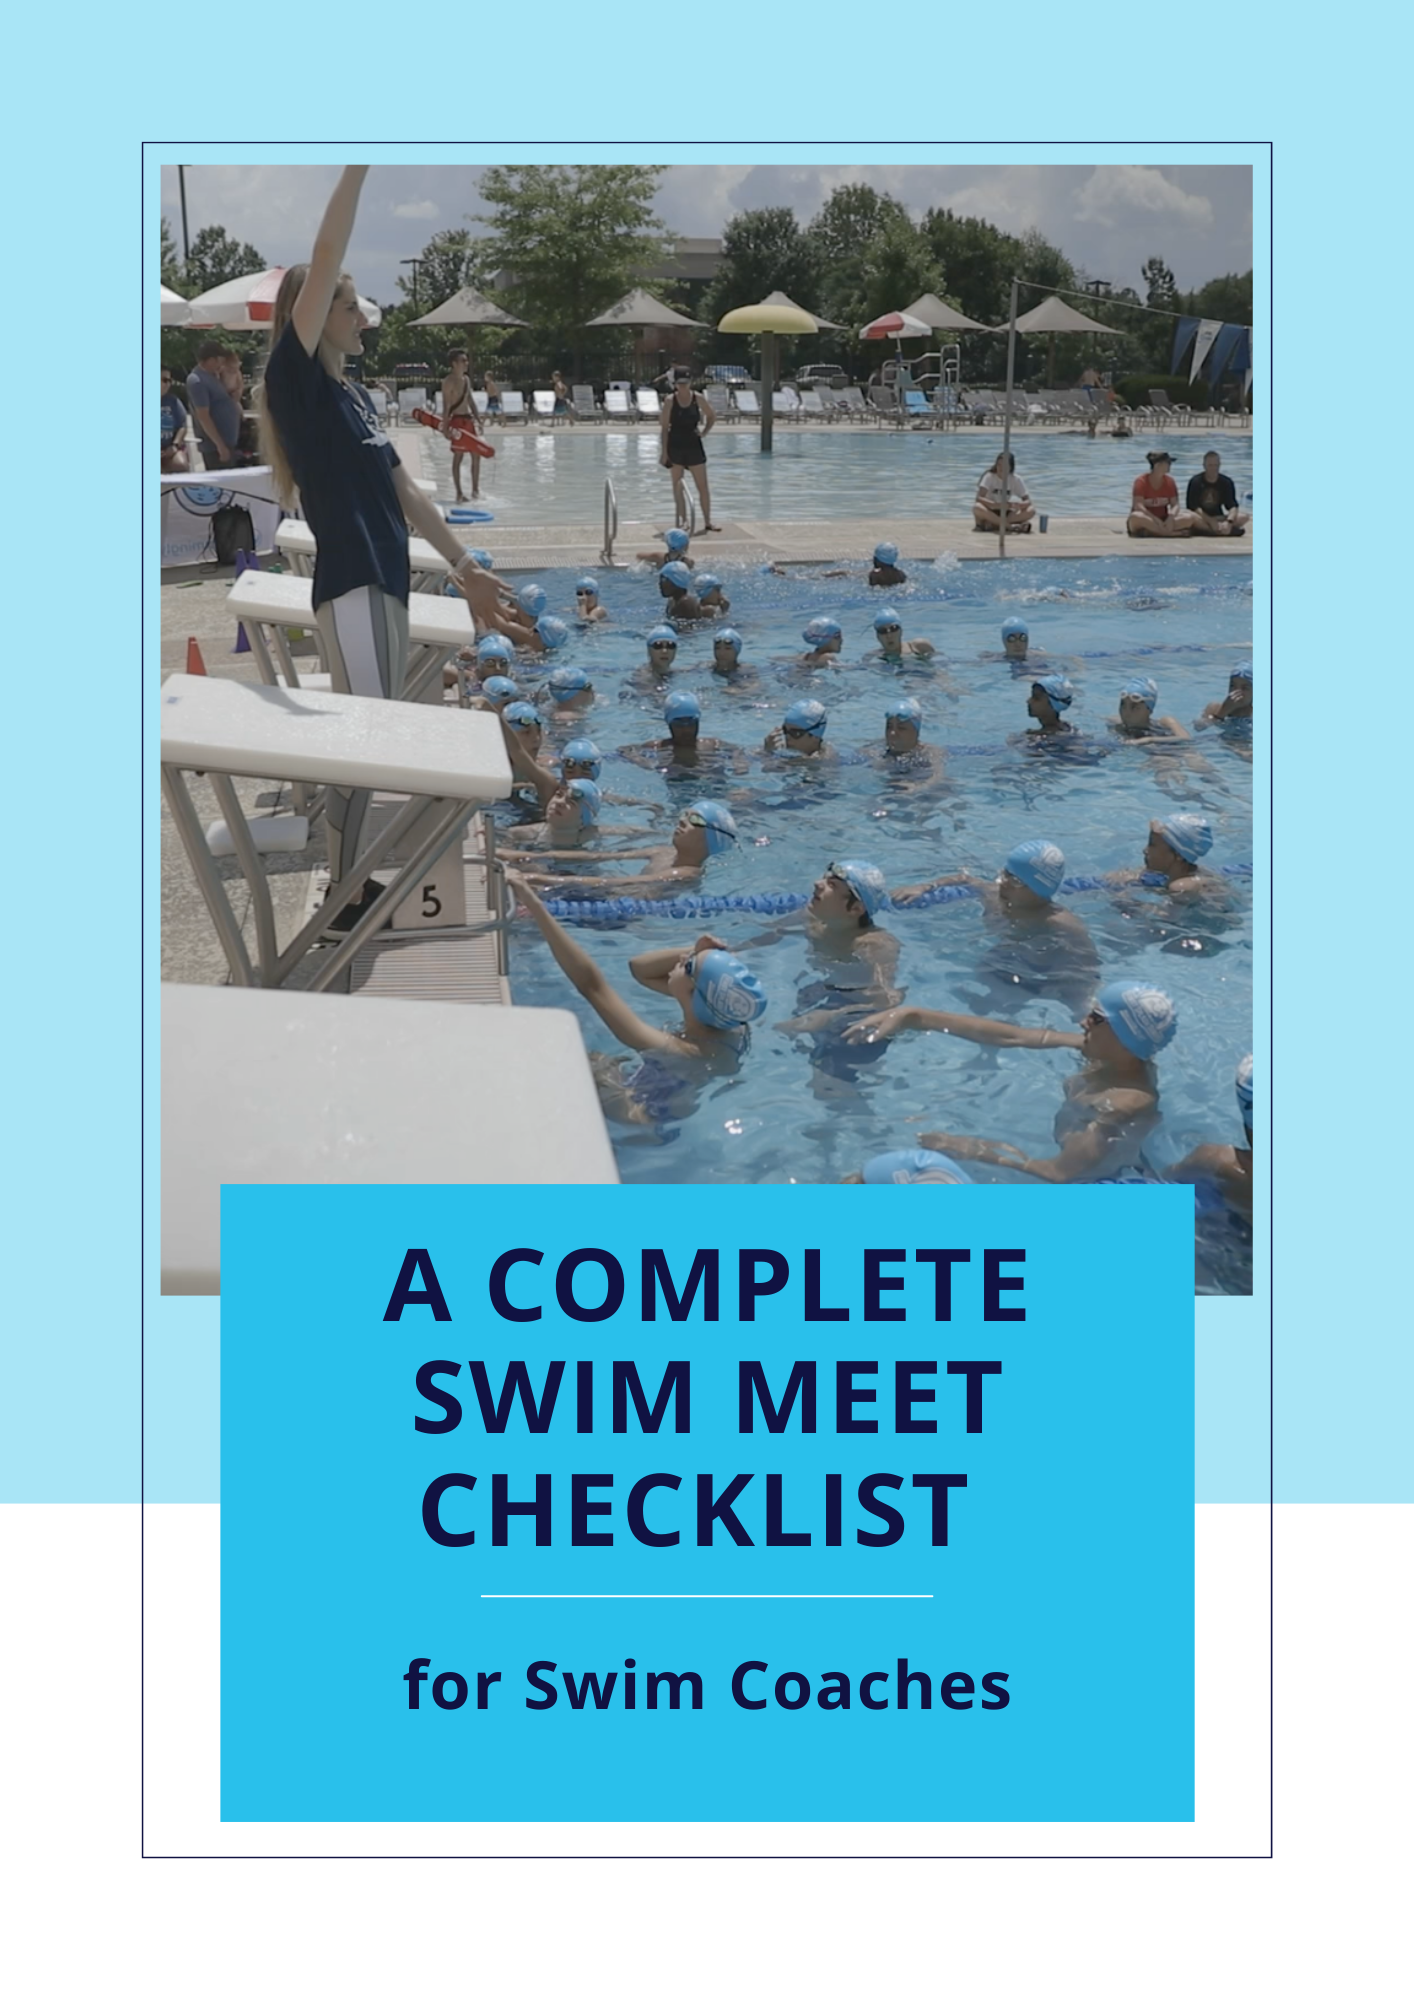 A Complete Swim Meet Checklist for Swim Coaches